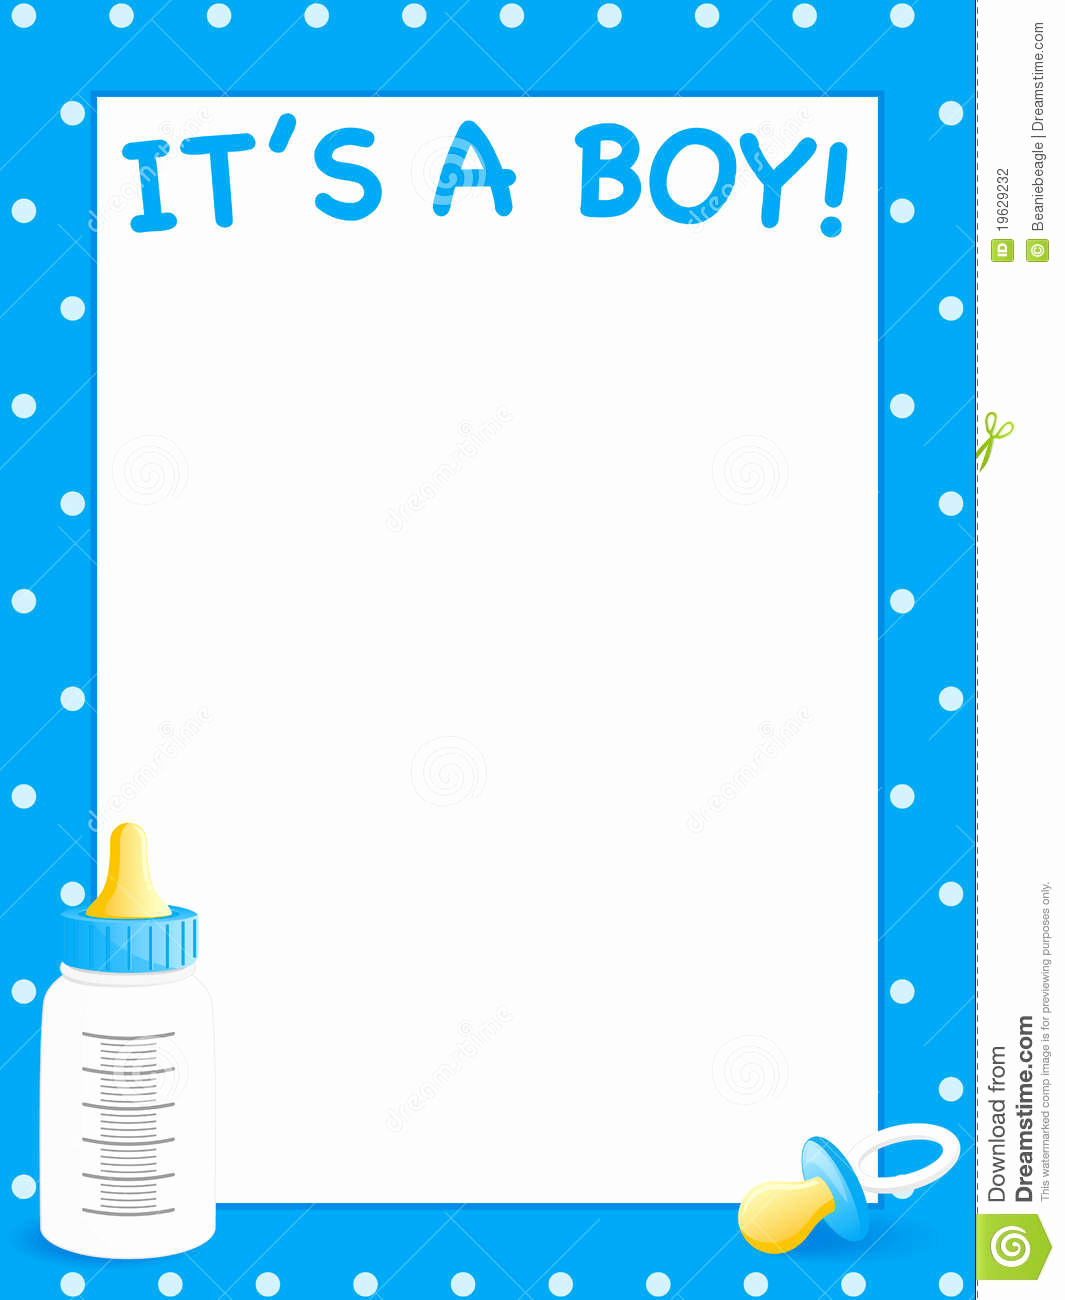 It A Boy Invitation Beautiful Baby Shower Invite Boys Stock Vector Illustration Of